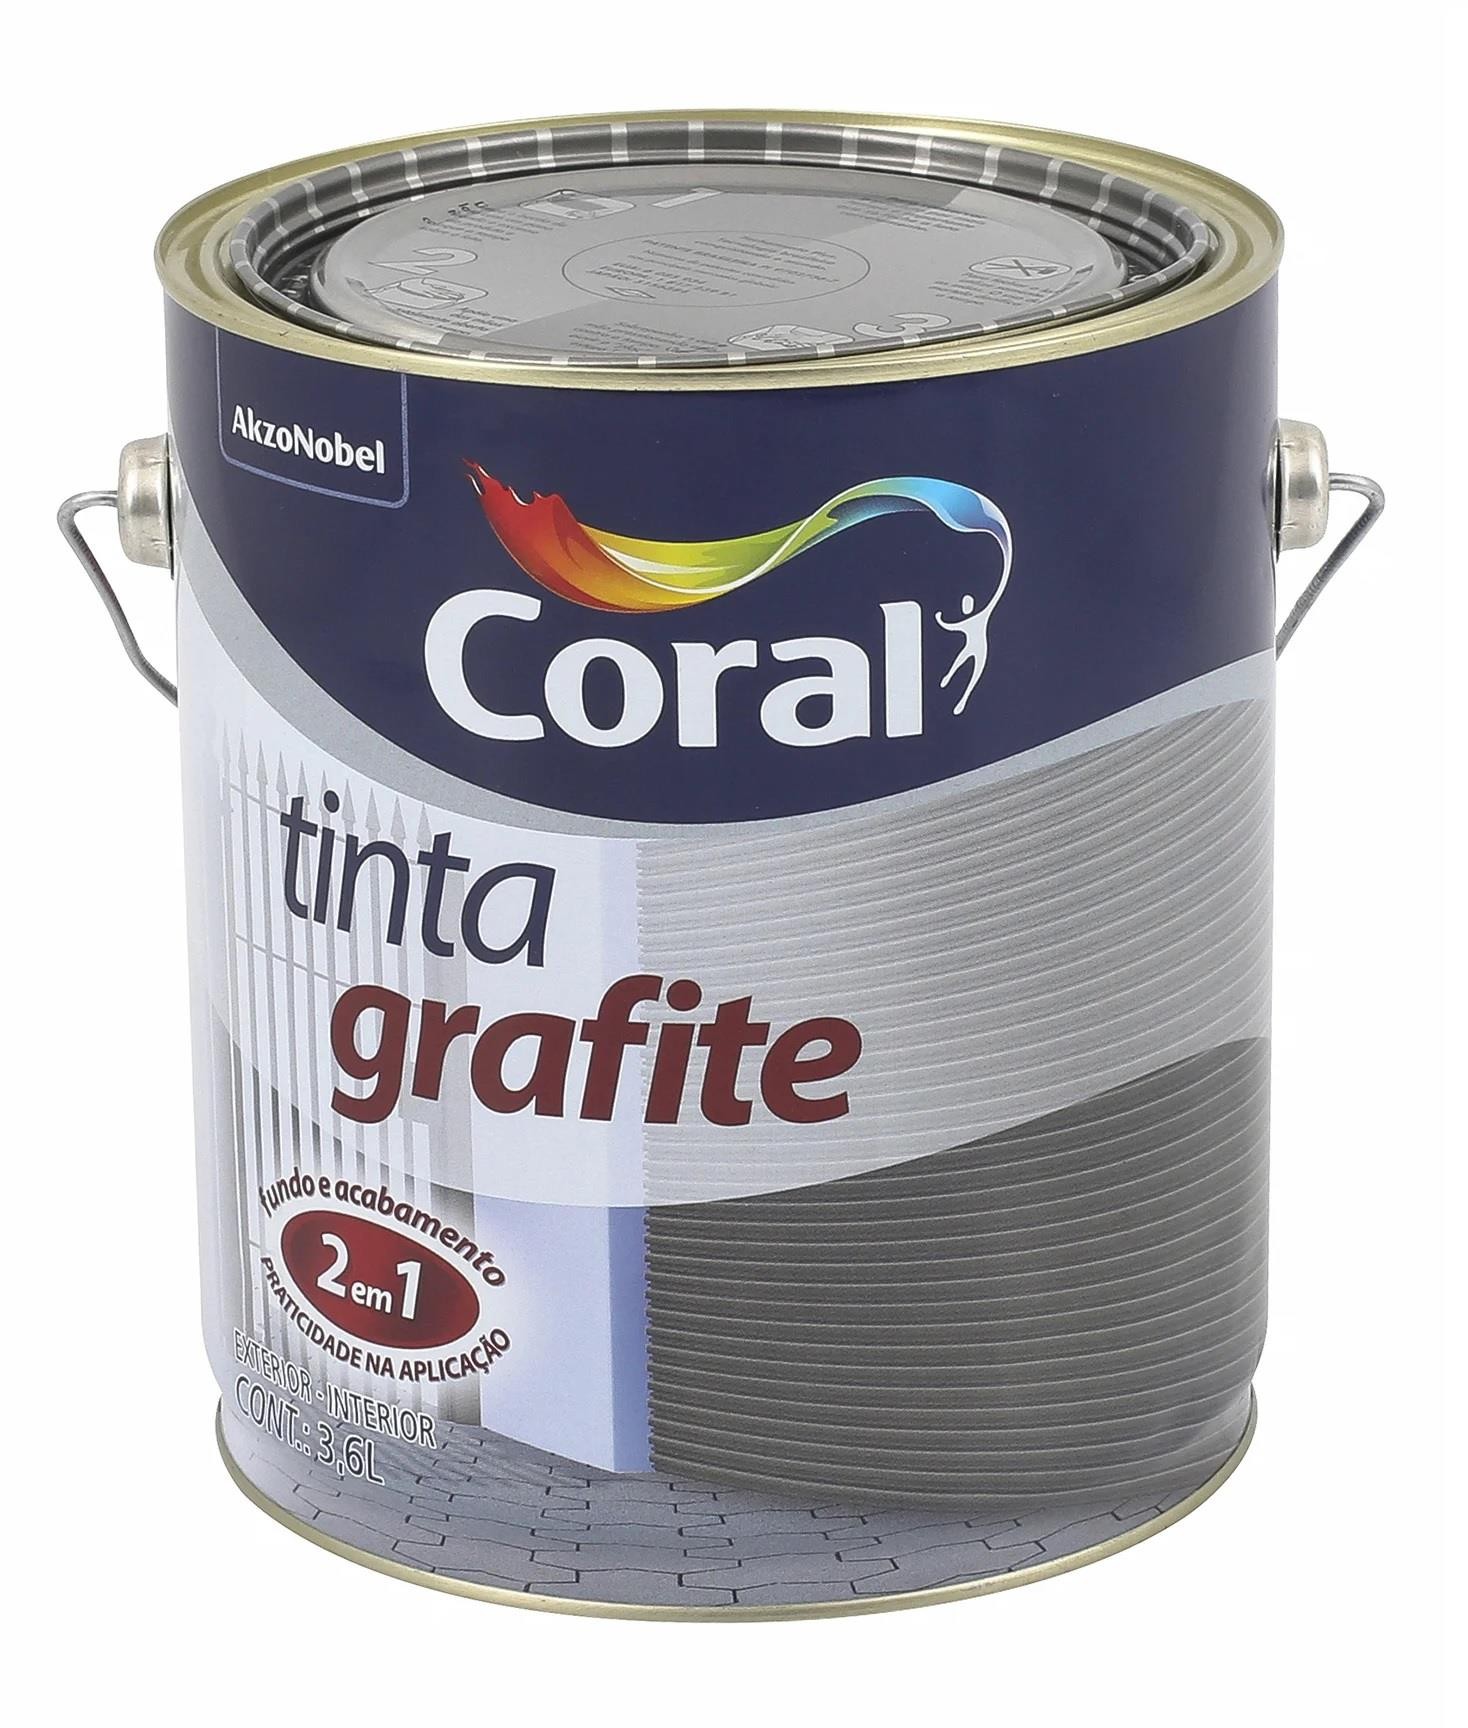 Esmalte Sintético Tinta Grafite Fosco Cinza Claro 3,6L Coral